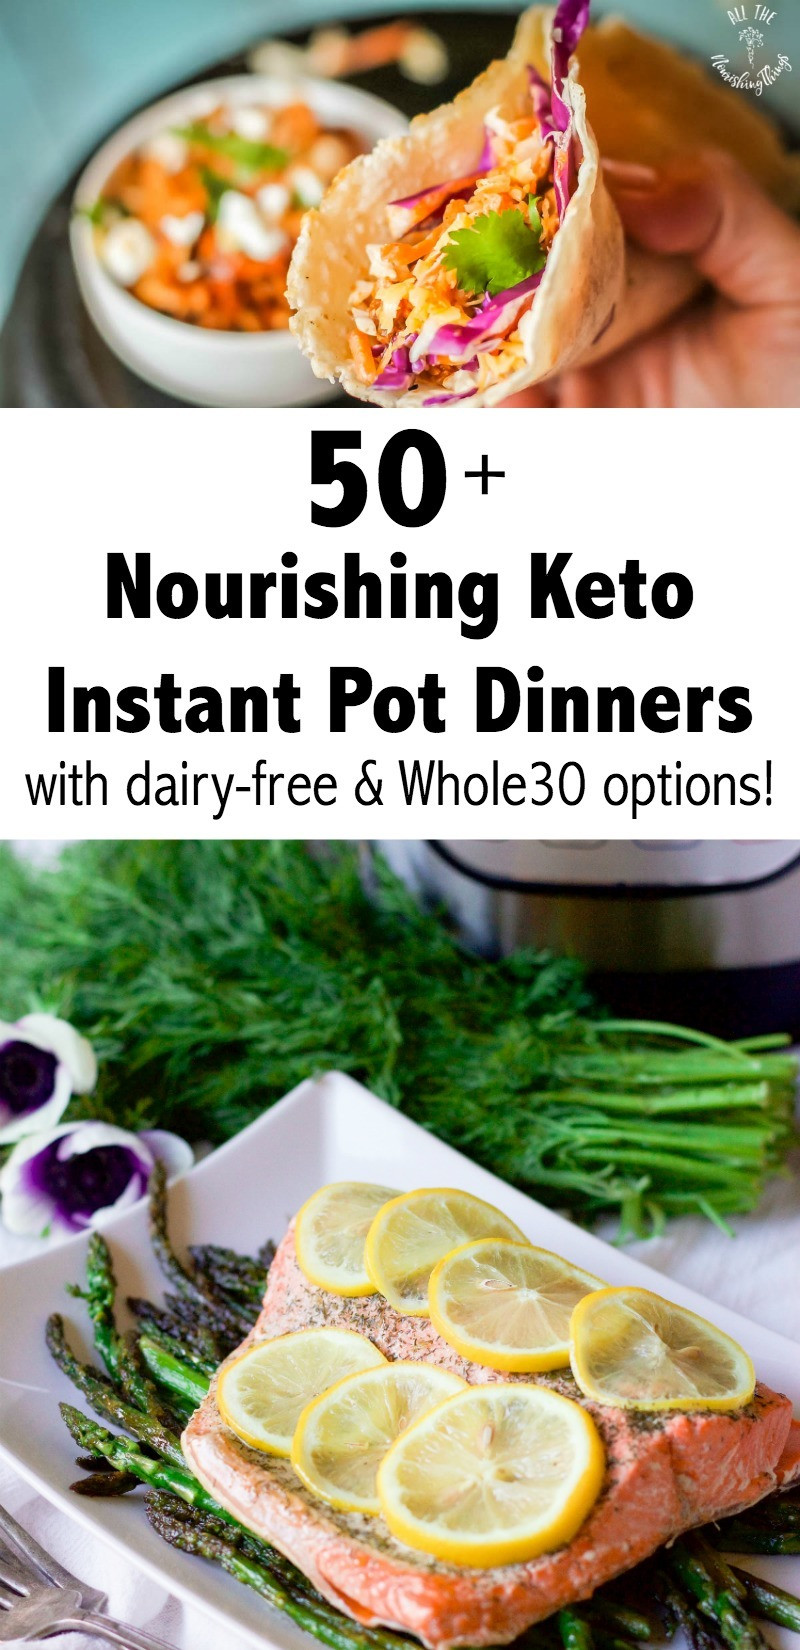 Keto Dinner Recipes Instant Pot
 50 Nourishing Keto Instant Pot Dinner Recipes dairy free